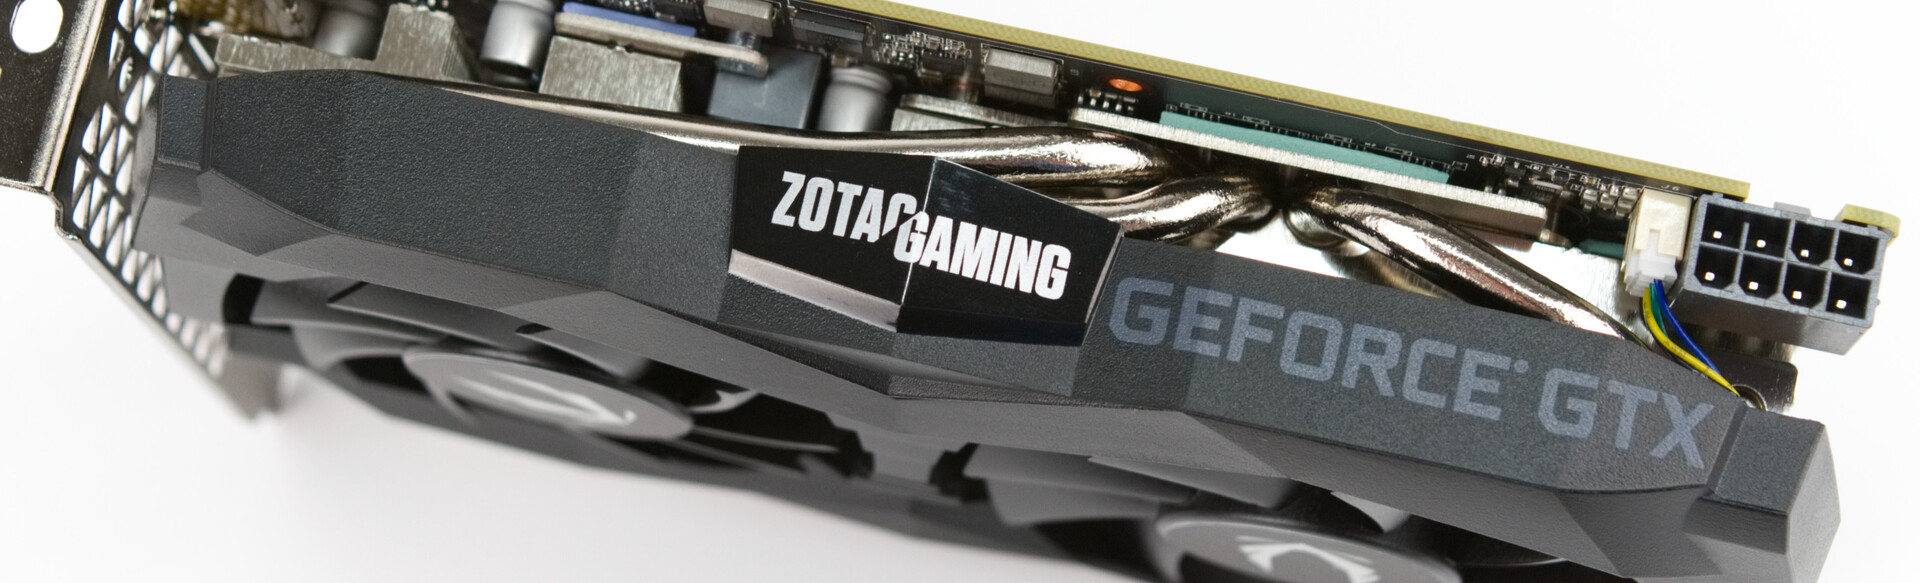 Zotac GeForce GTX 1660 Ti Desktop Graphics Card Review 